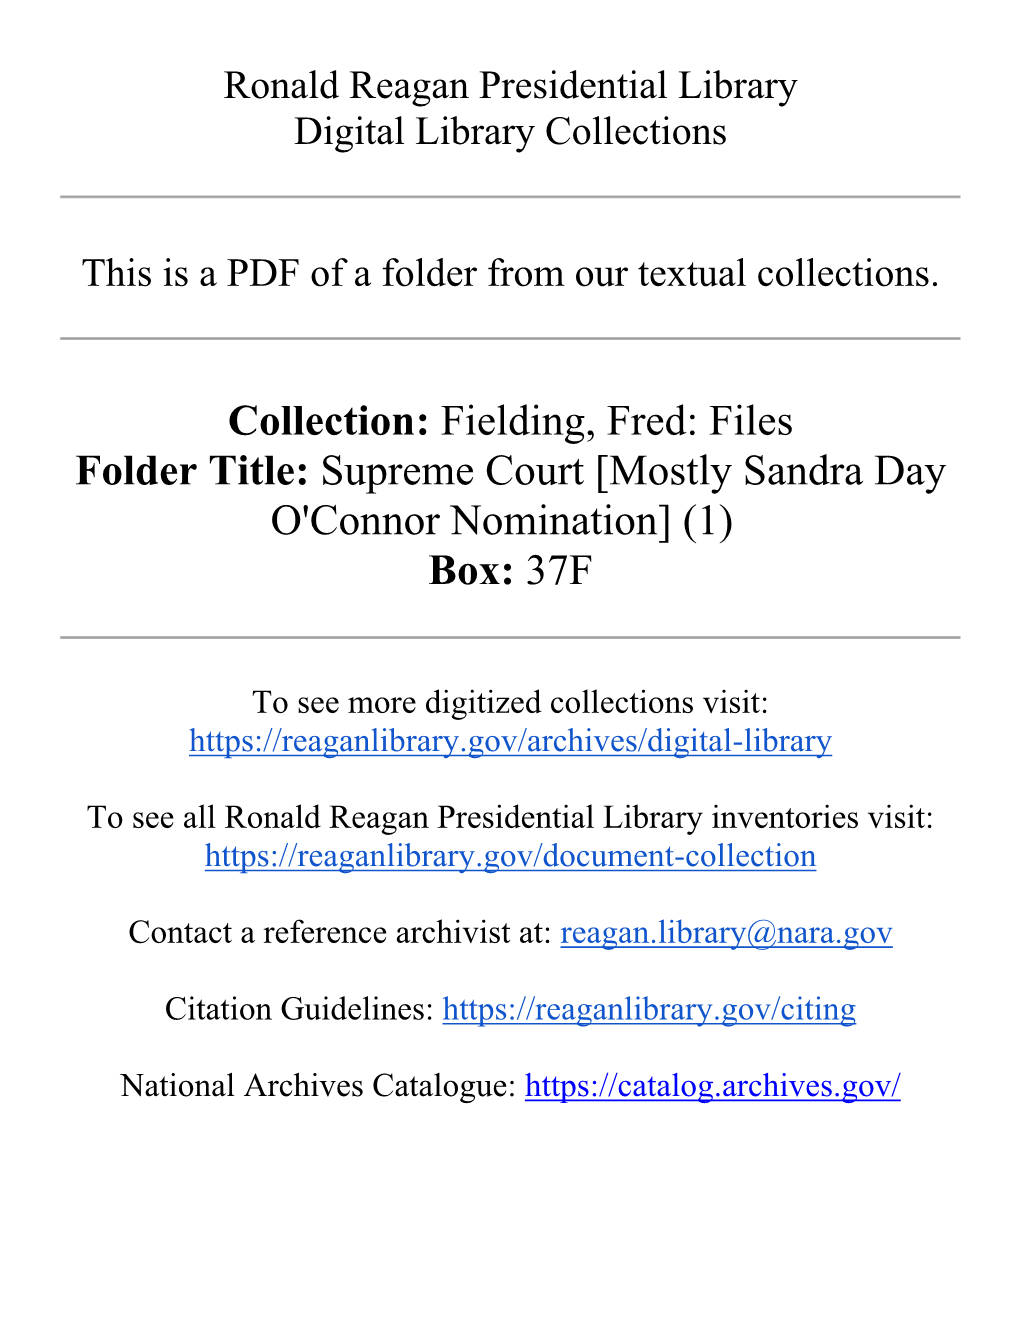 Supreme Court [Mostly Sandra Day O'connor Nomination] (1) Box: 37F